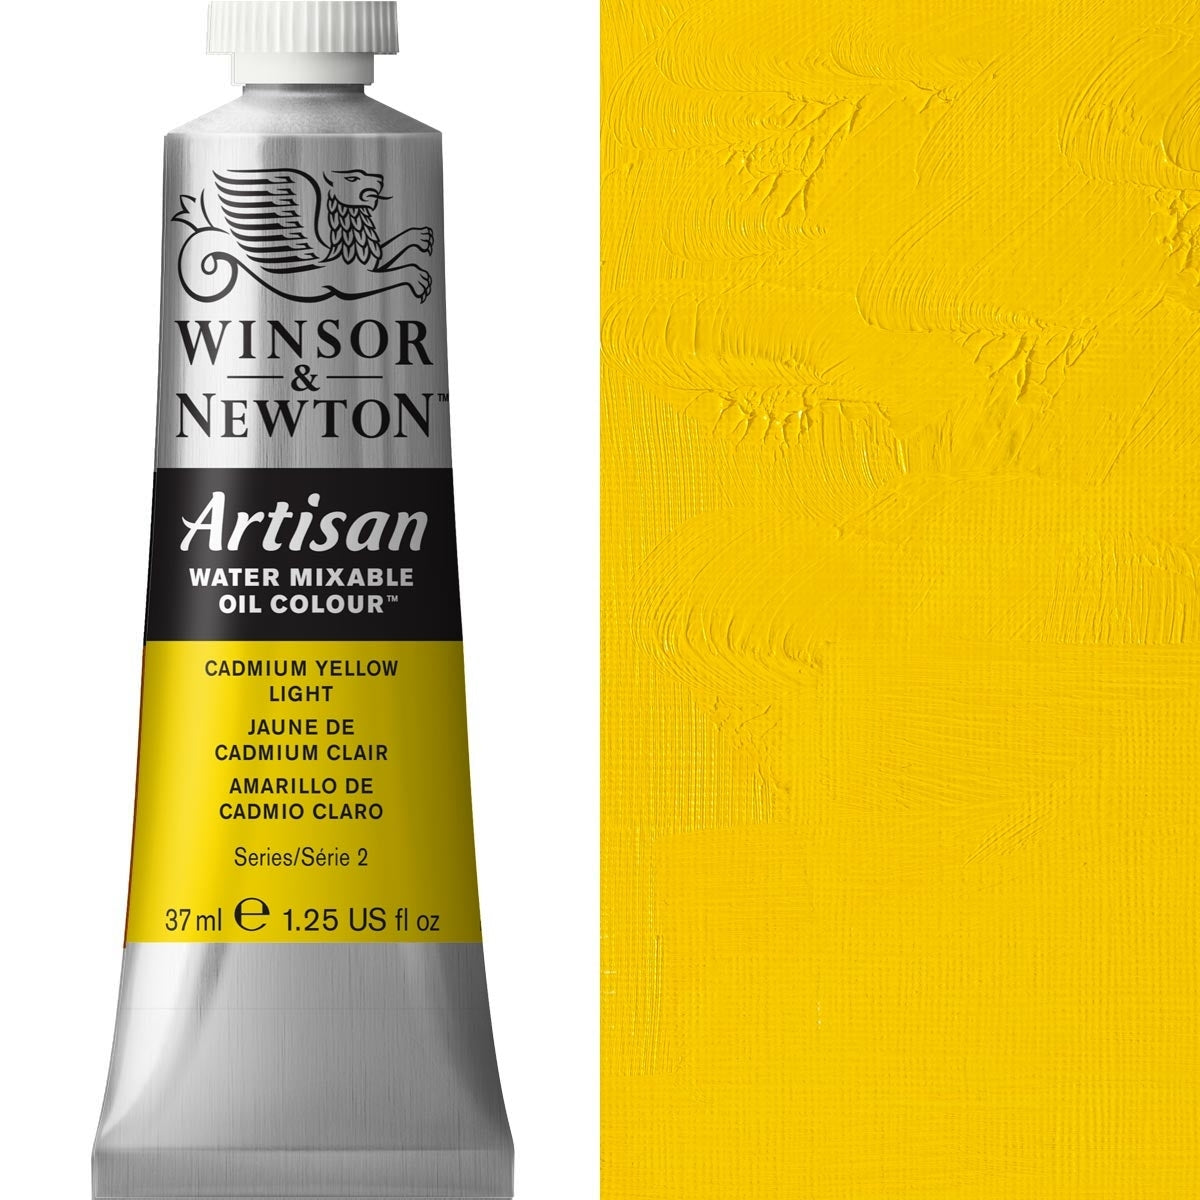 Winsor and Newton - Artisan Oil Colour Watermixable - 37ml - Cadmium Yellow Light